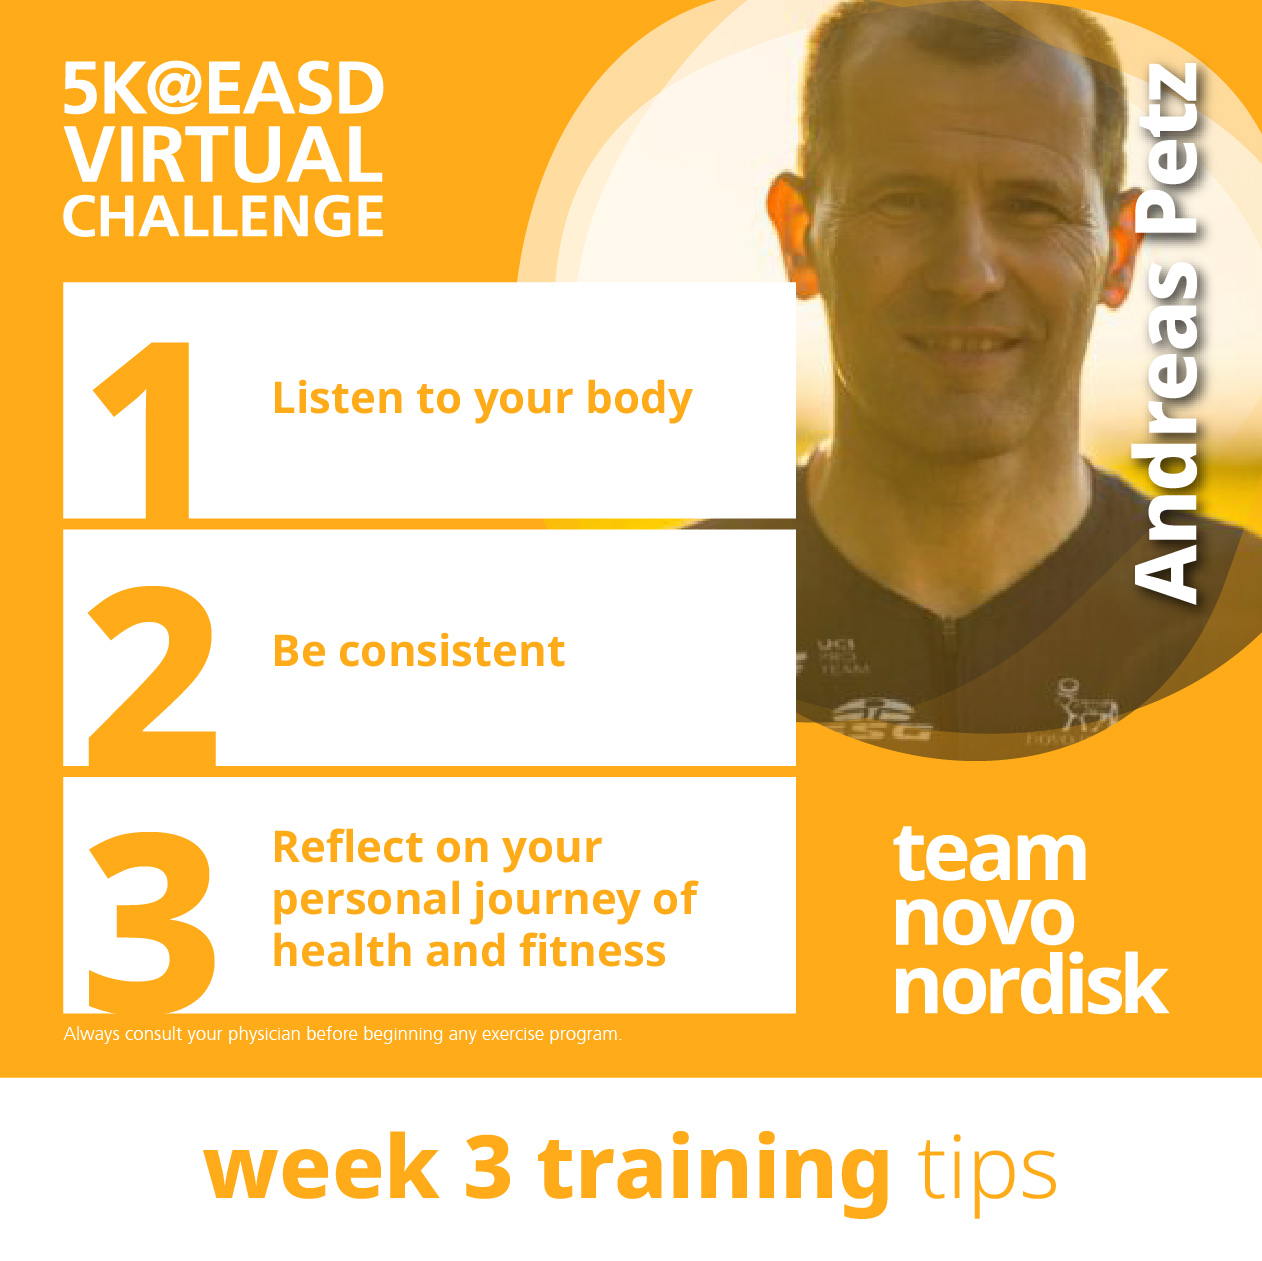 5K Training Plans Week 3 Tips